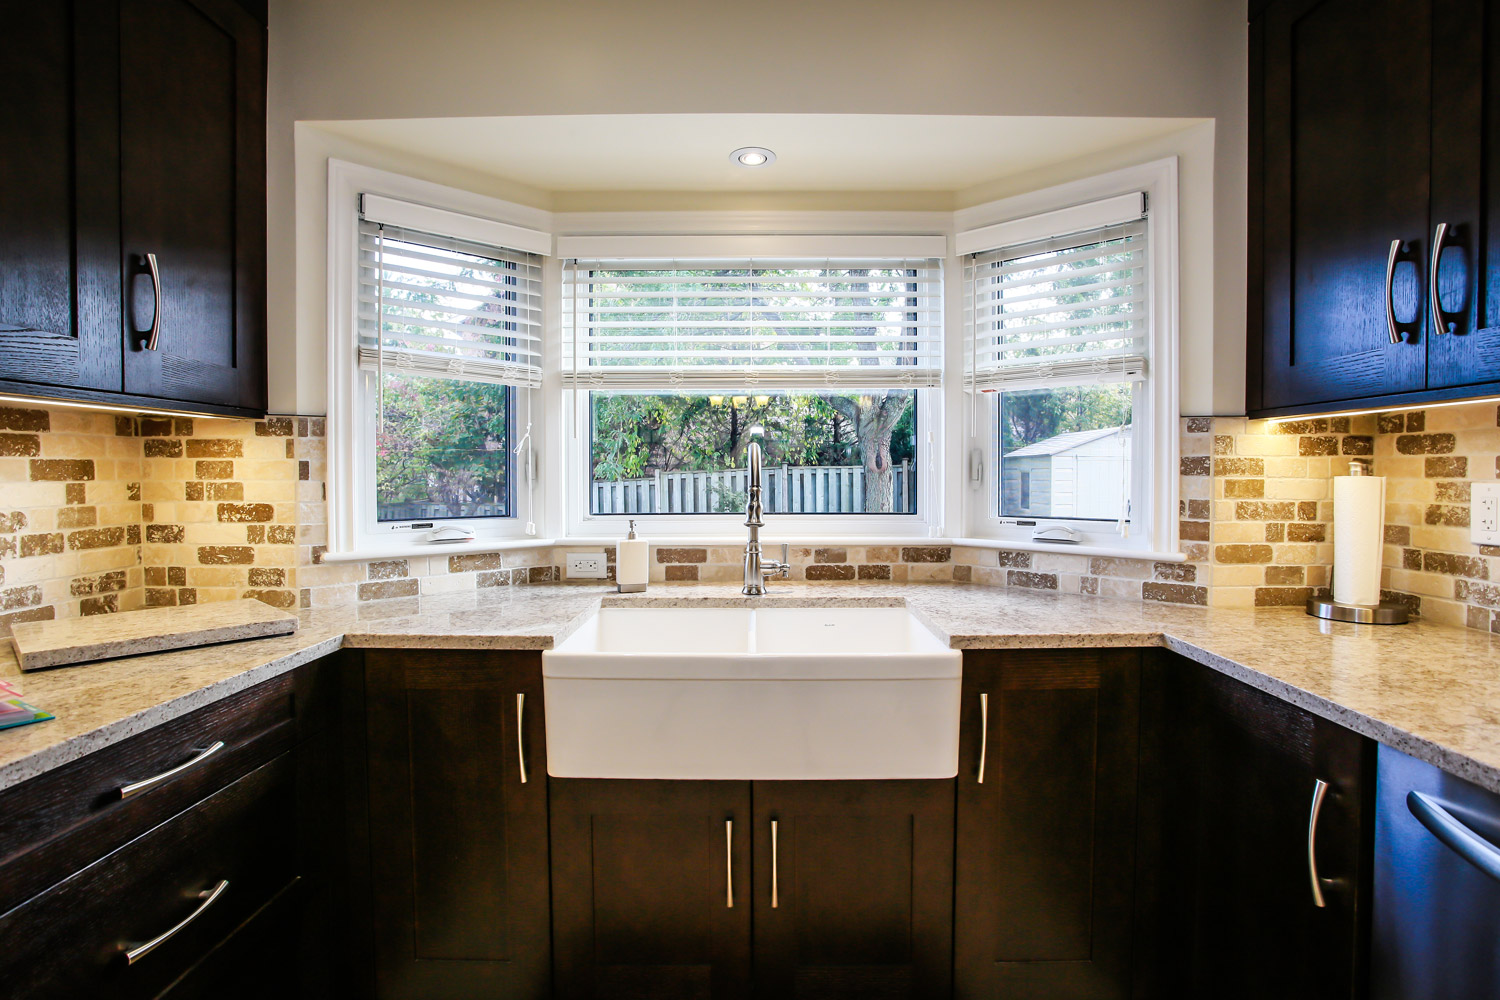 Transitional kitchen with dark wood cabinets, white farmhouse apron kitchen sink, earth tone backsplash